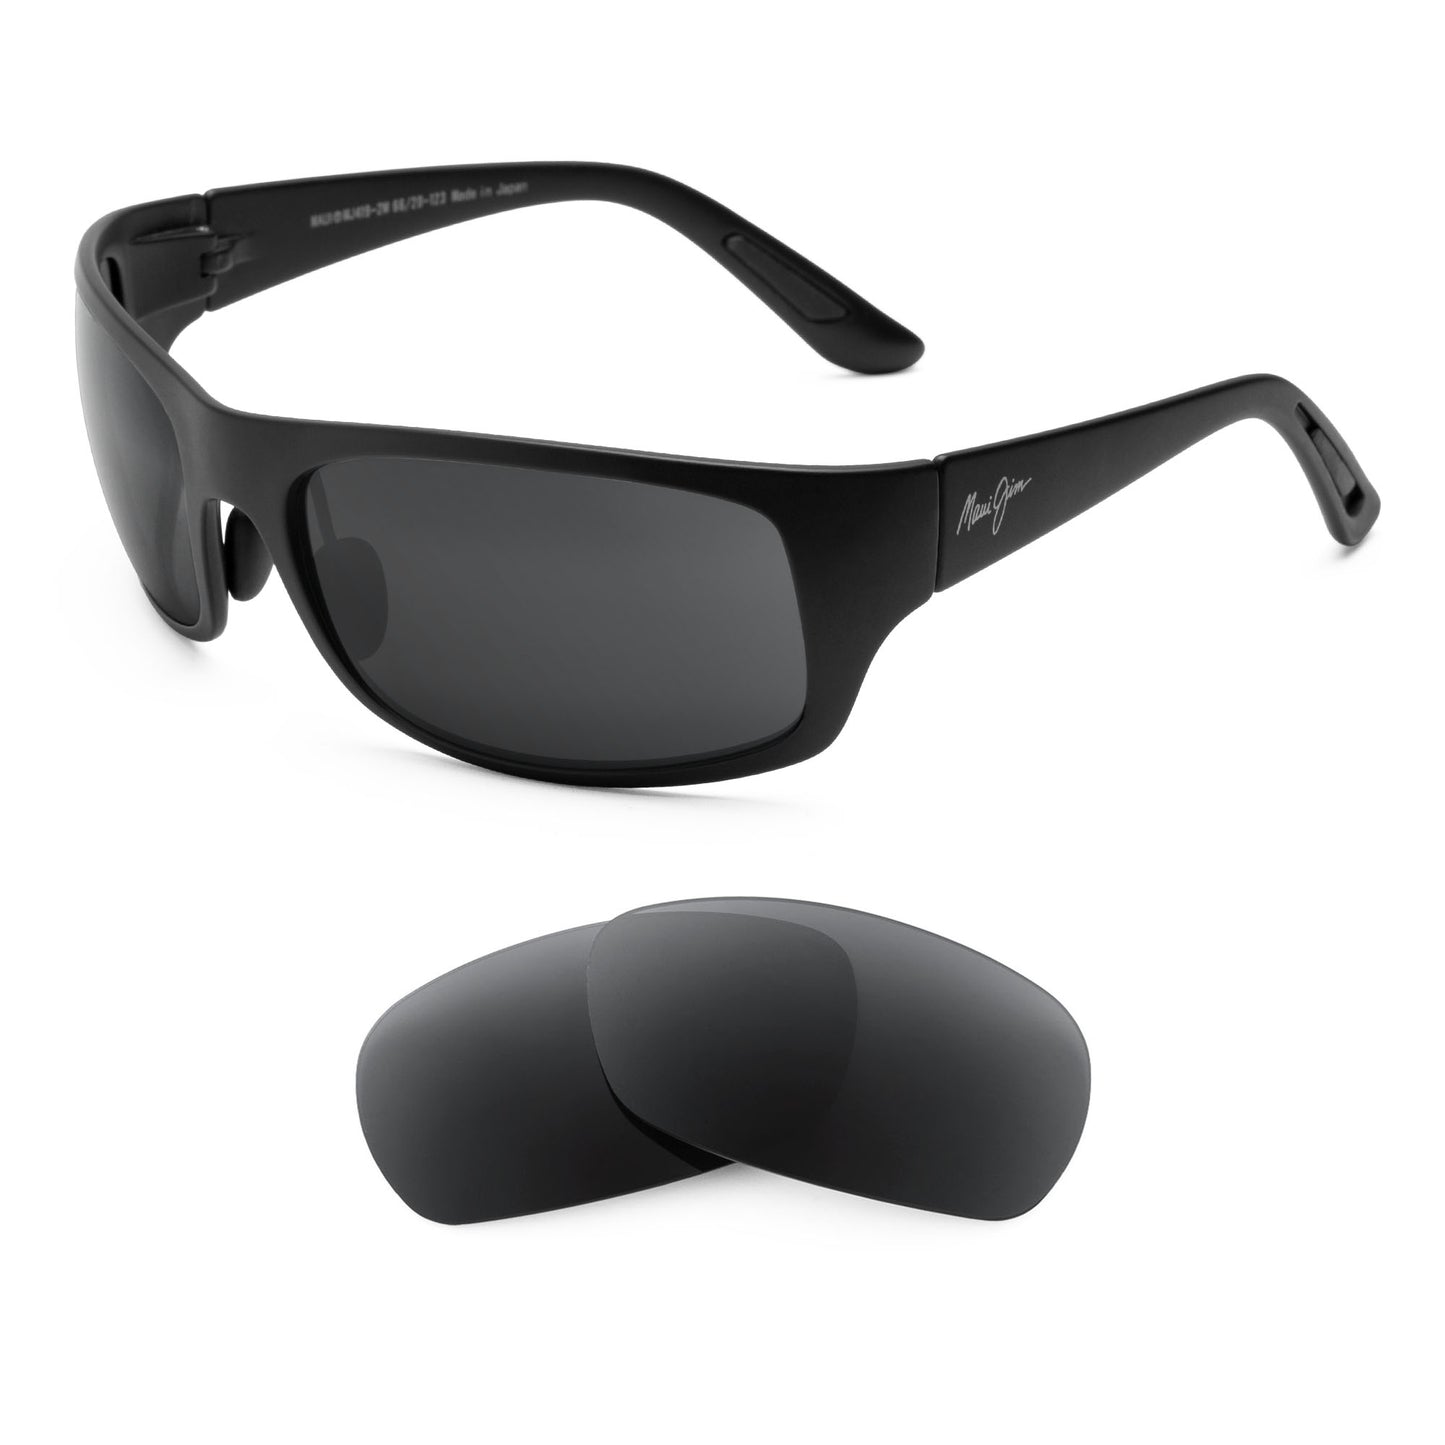 Maui Jim Haleakala sunglasses with replacement lenses